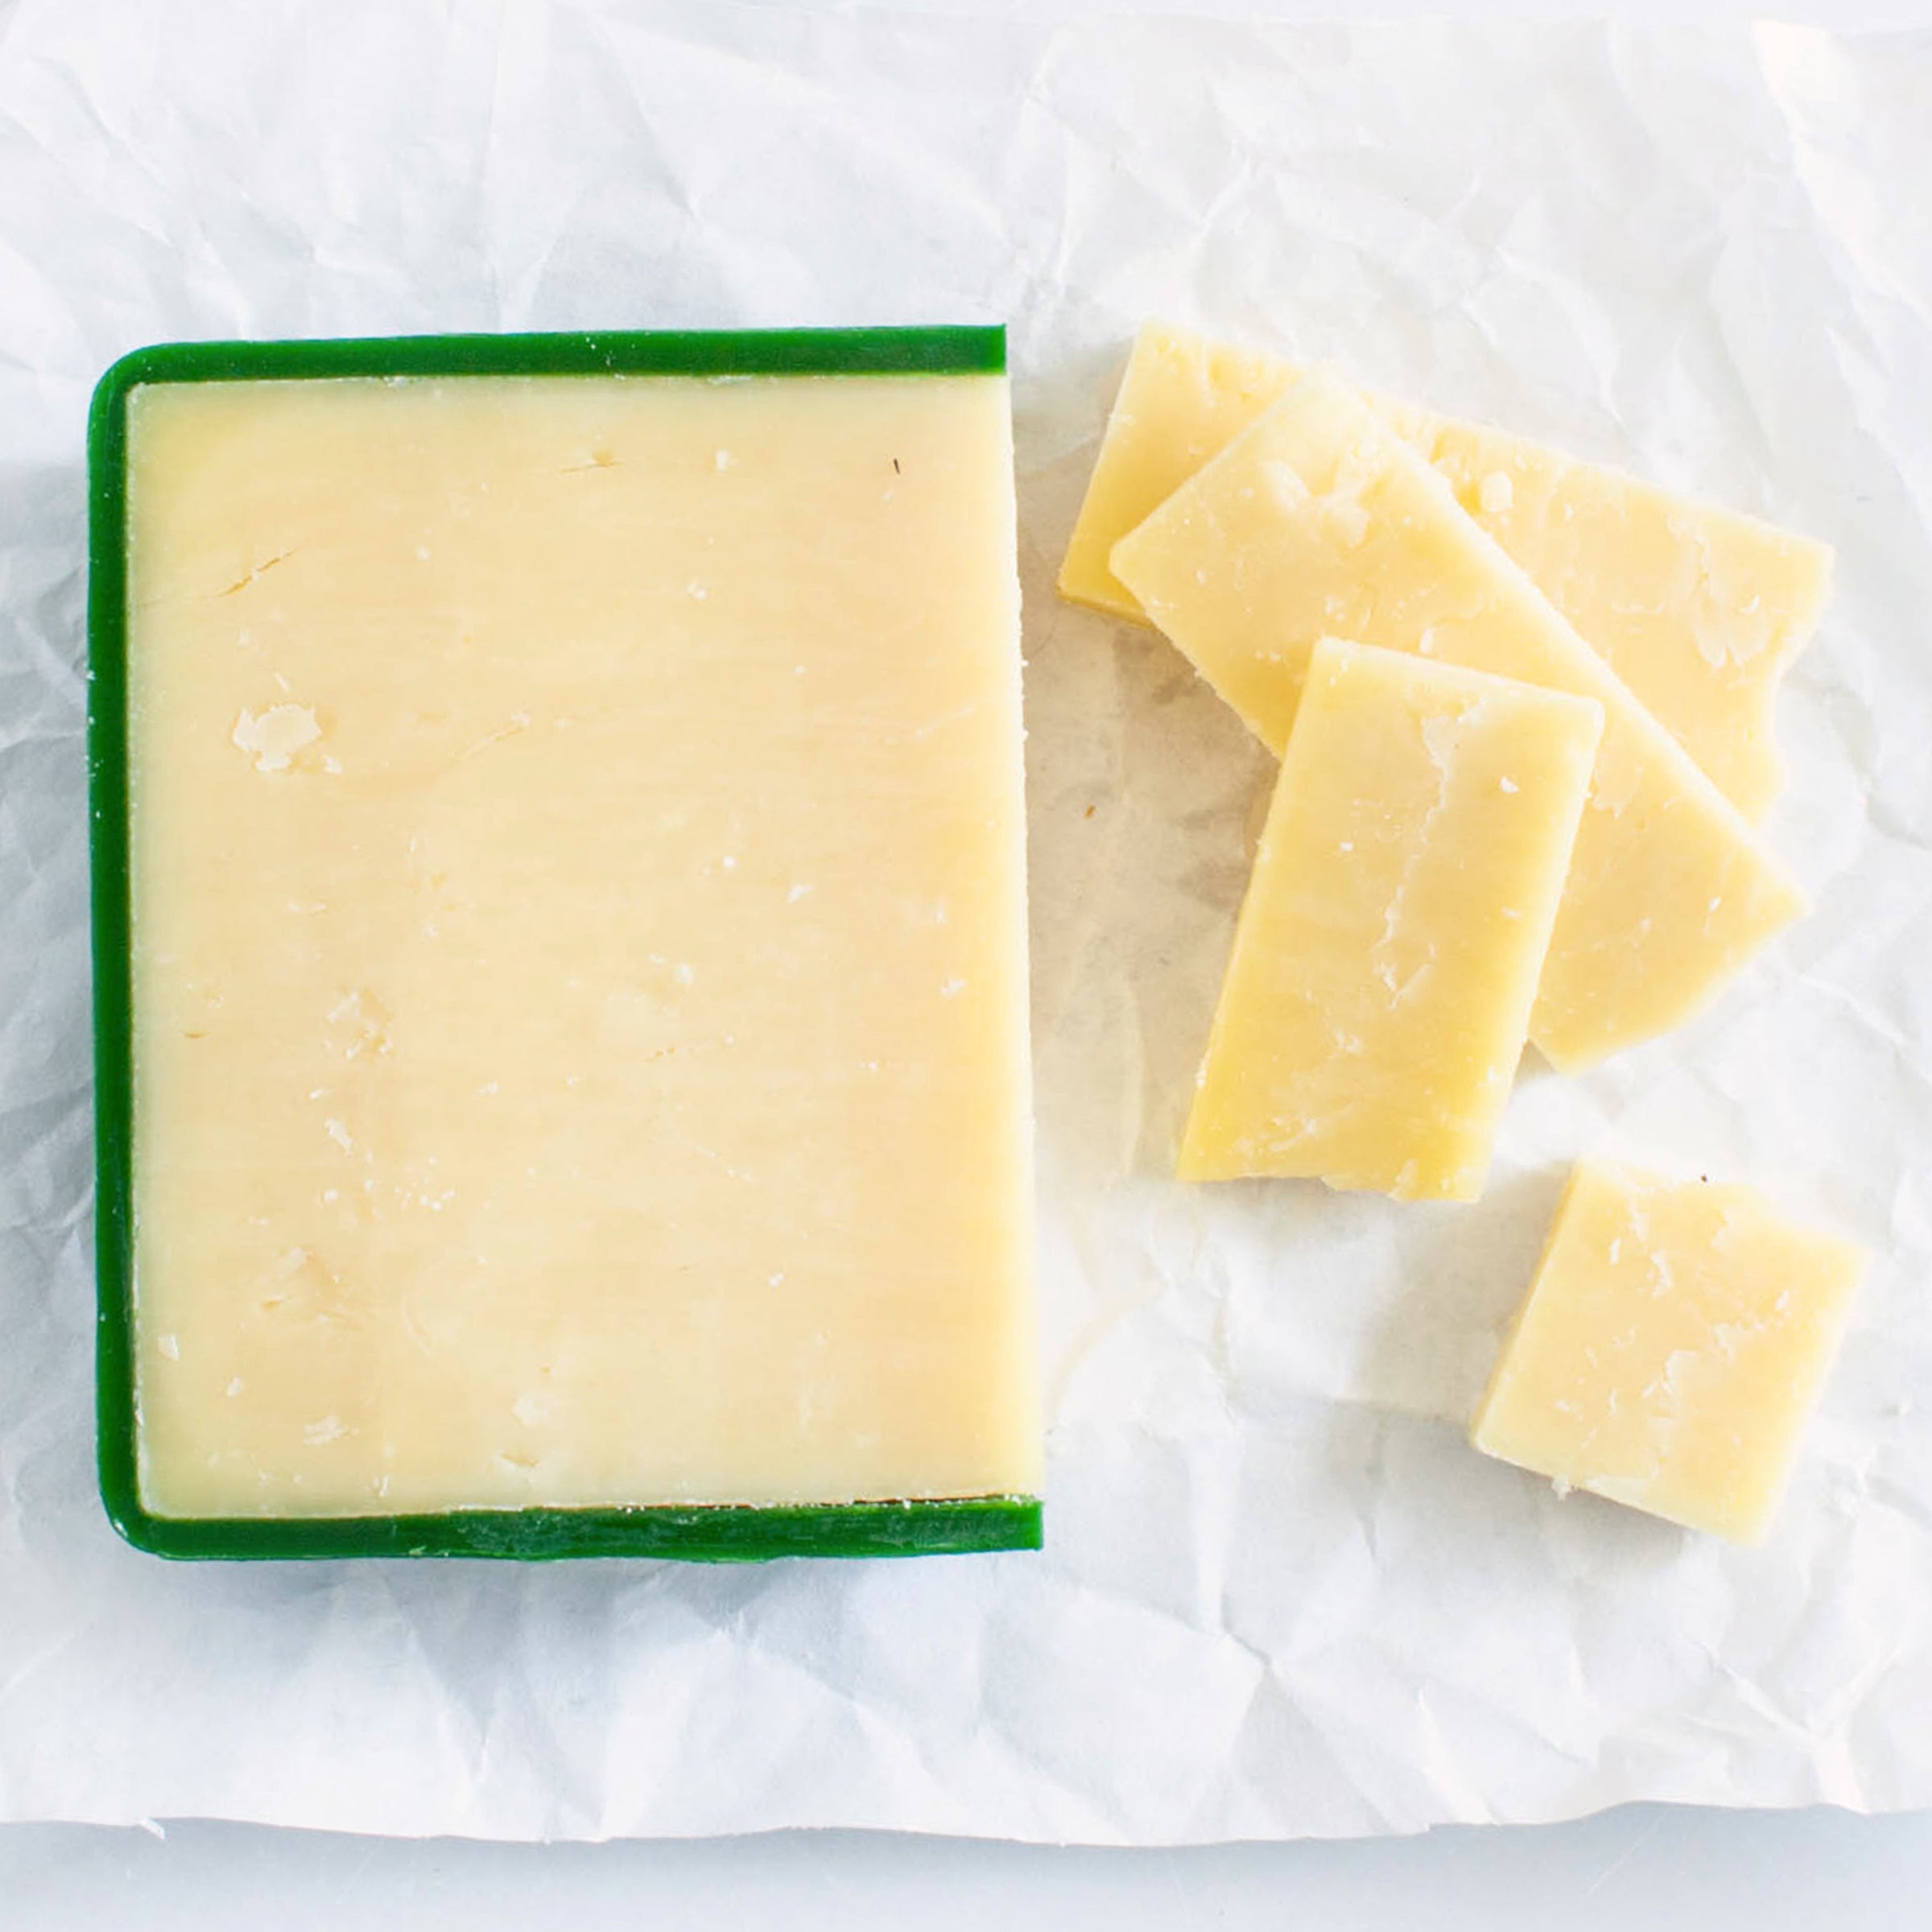 Irish Green Wax Mature Cheddar Cheese_Cut & Wrapped by igourmet_Cheese